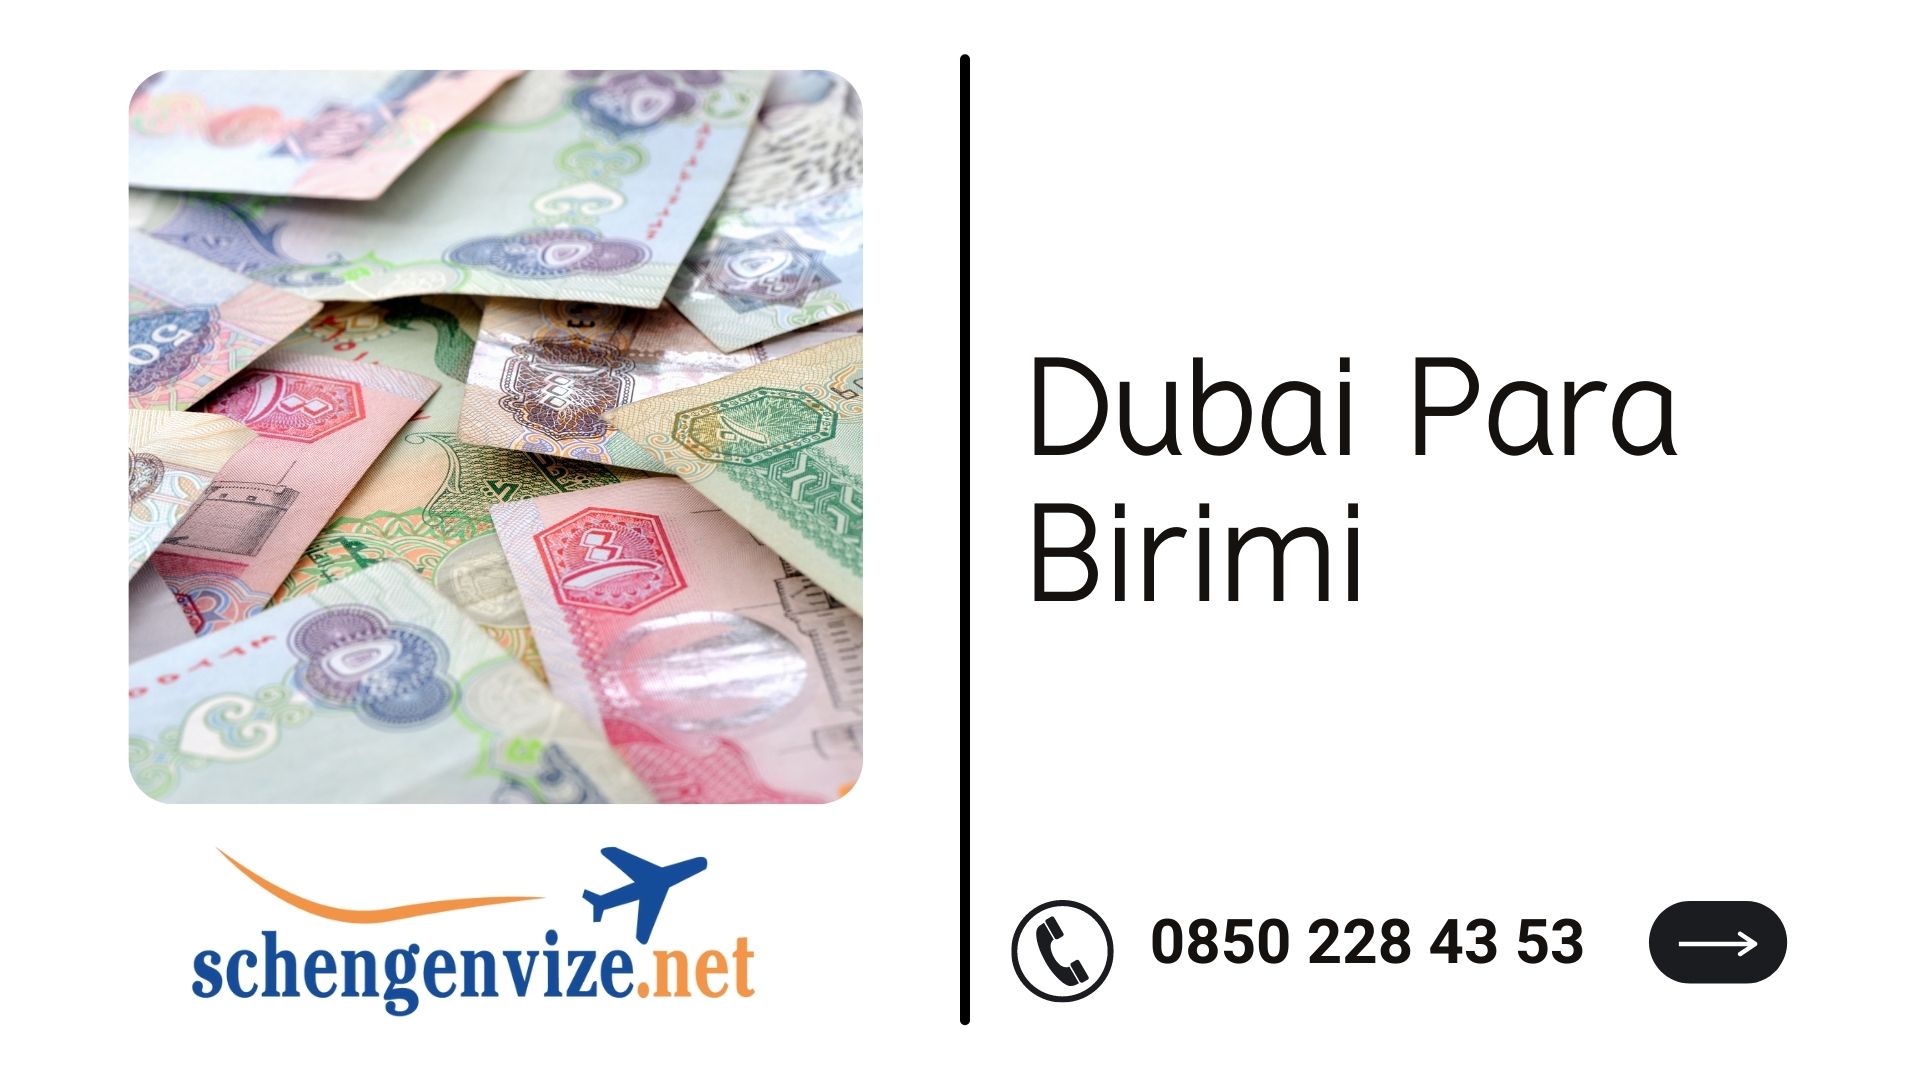 Dubai Para Birimi Schengen Vize